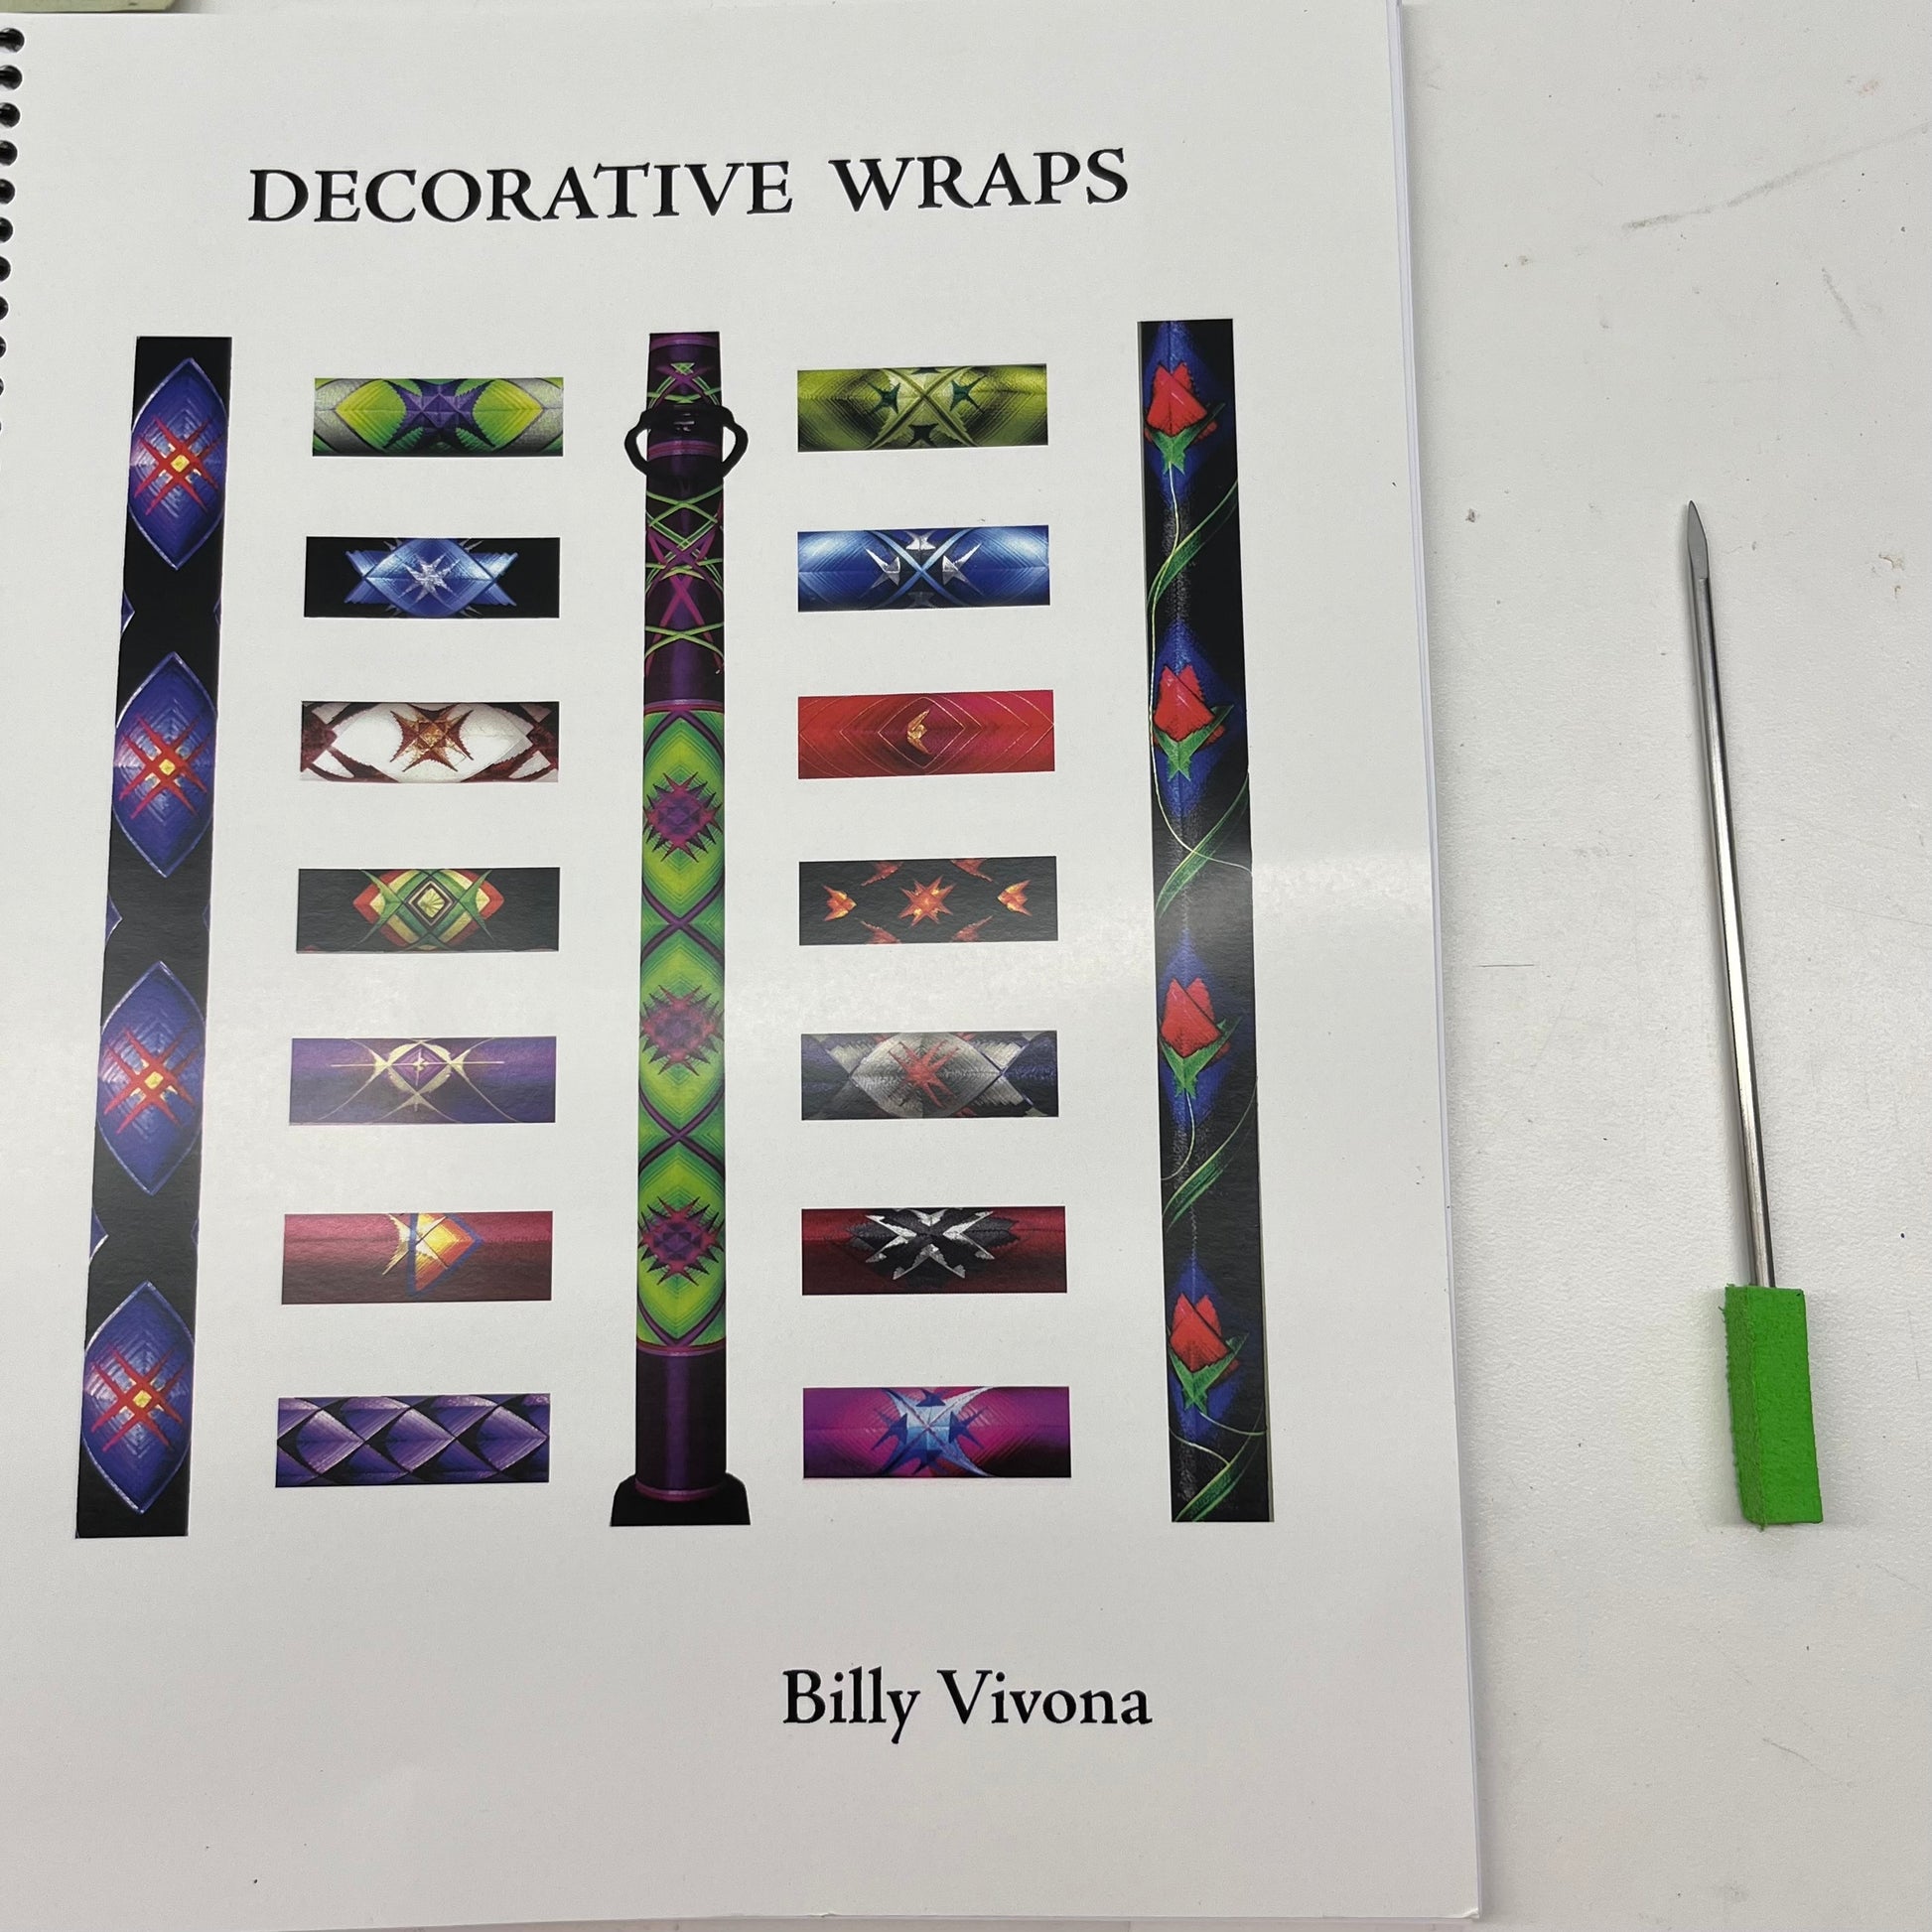 Decorative Wraps by Billy Vivona